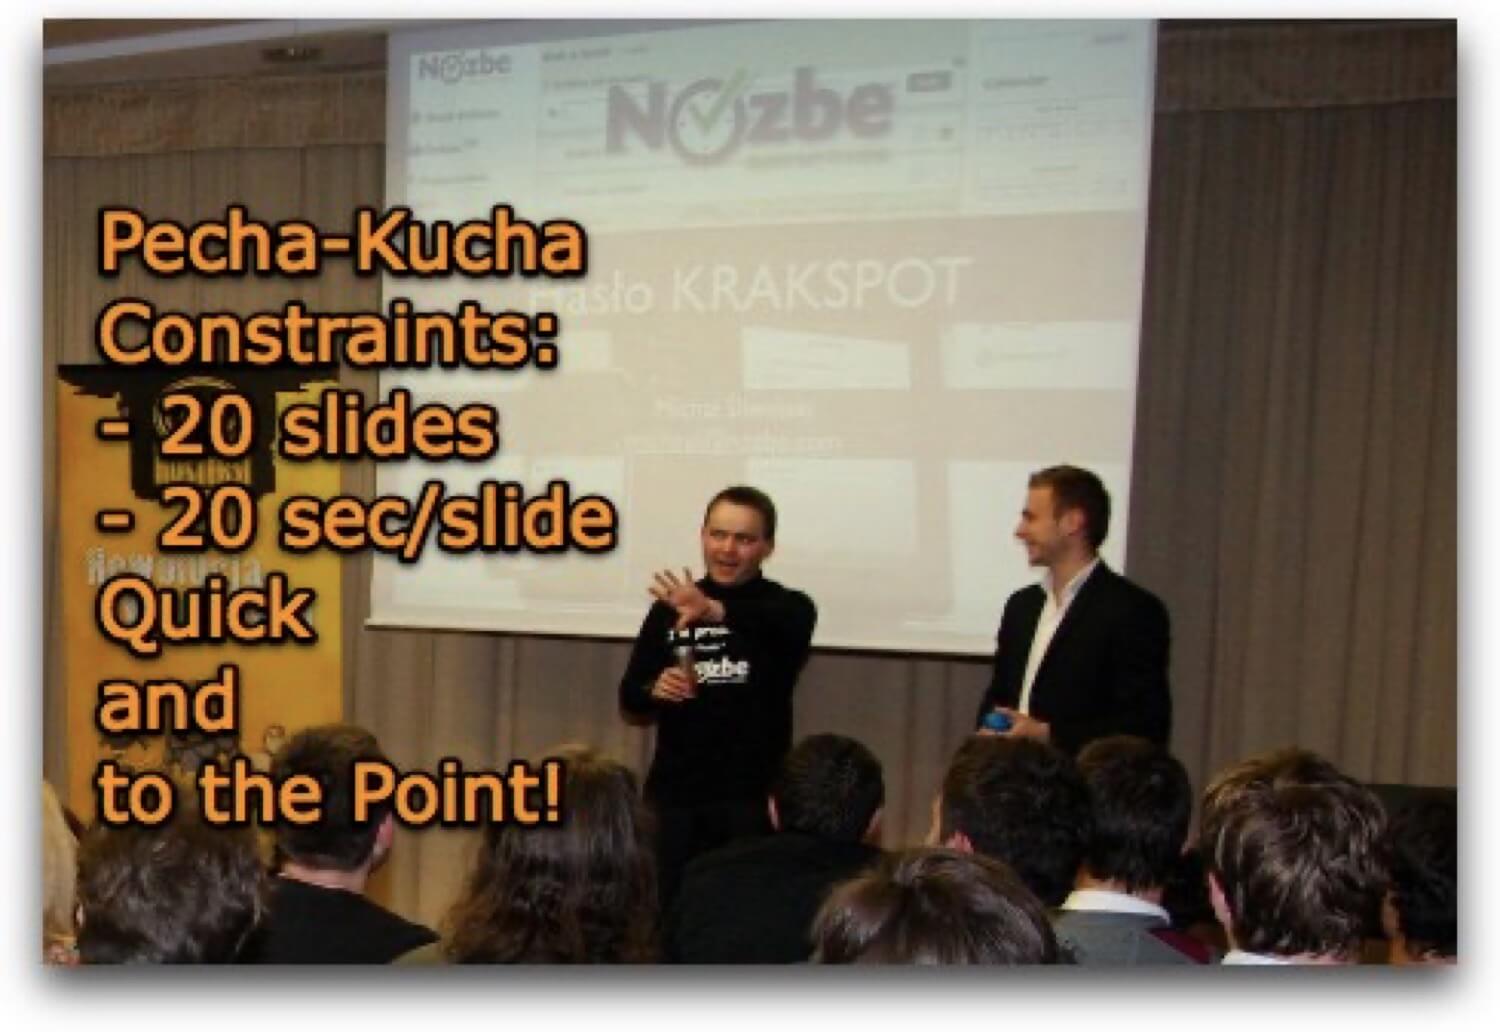 Pecha-Kucha Style Presentations Rock!